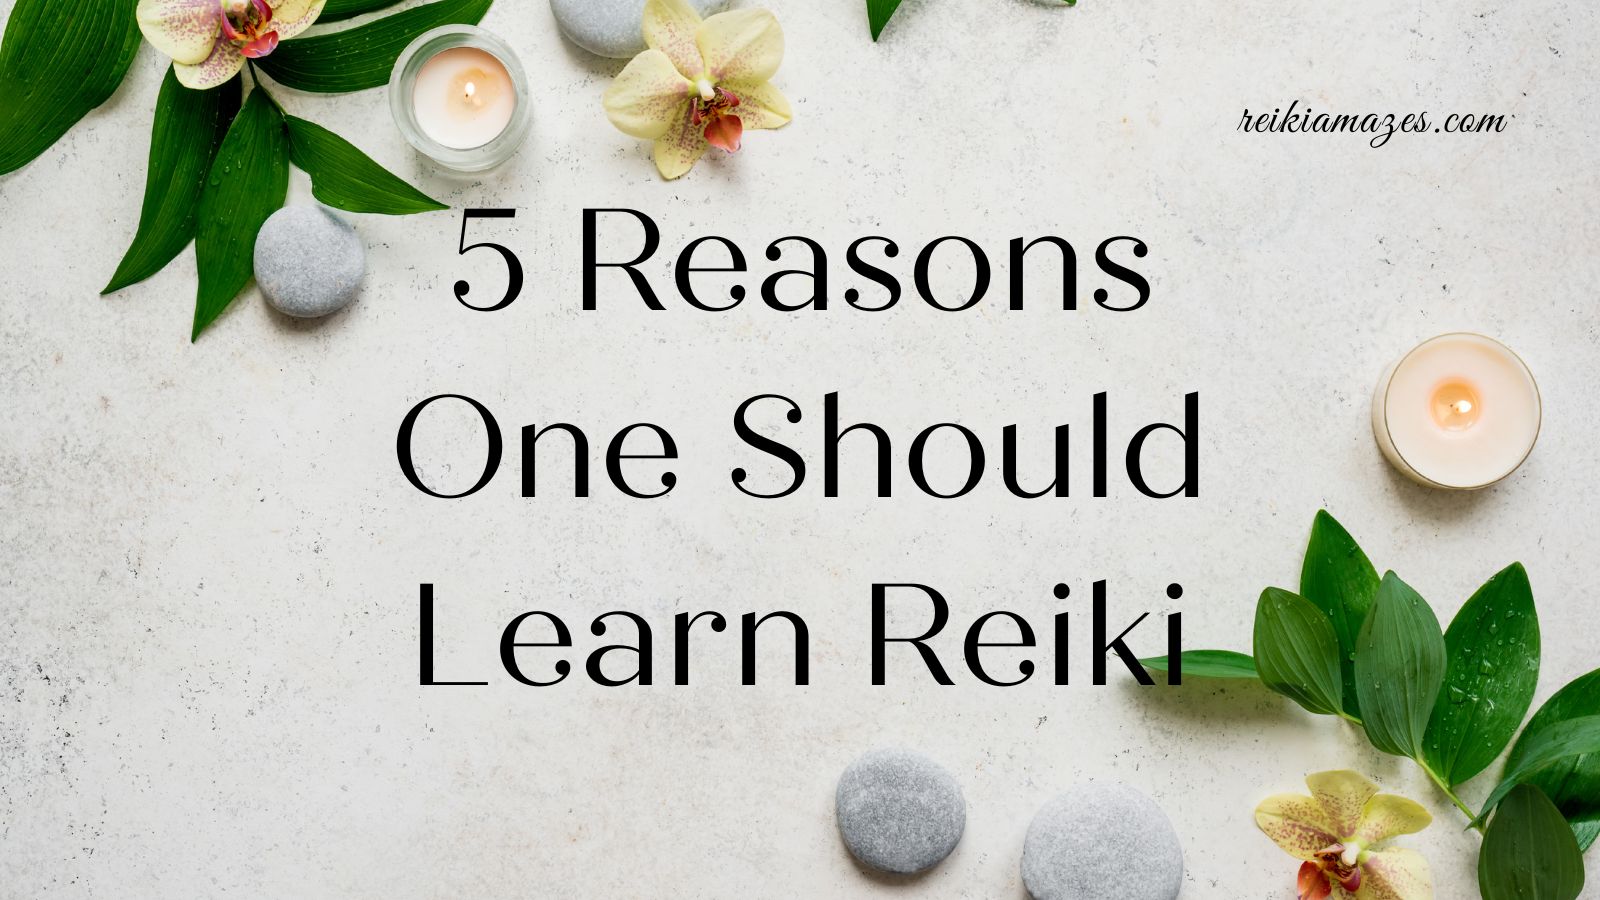 5 reasons to learn Reiki